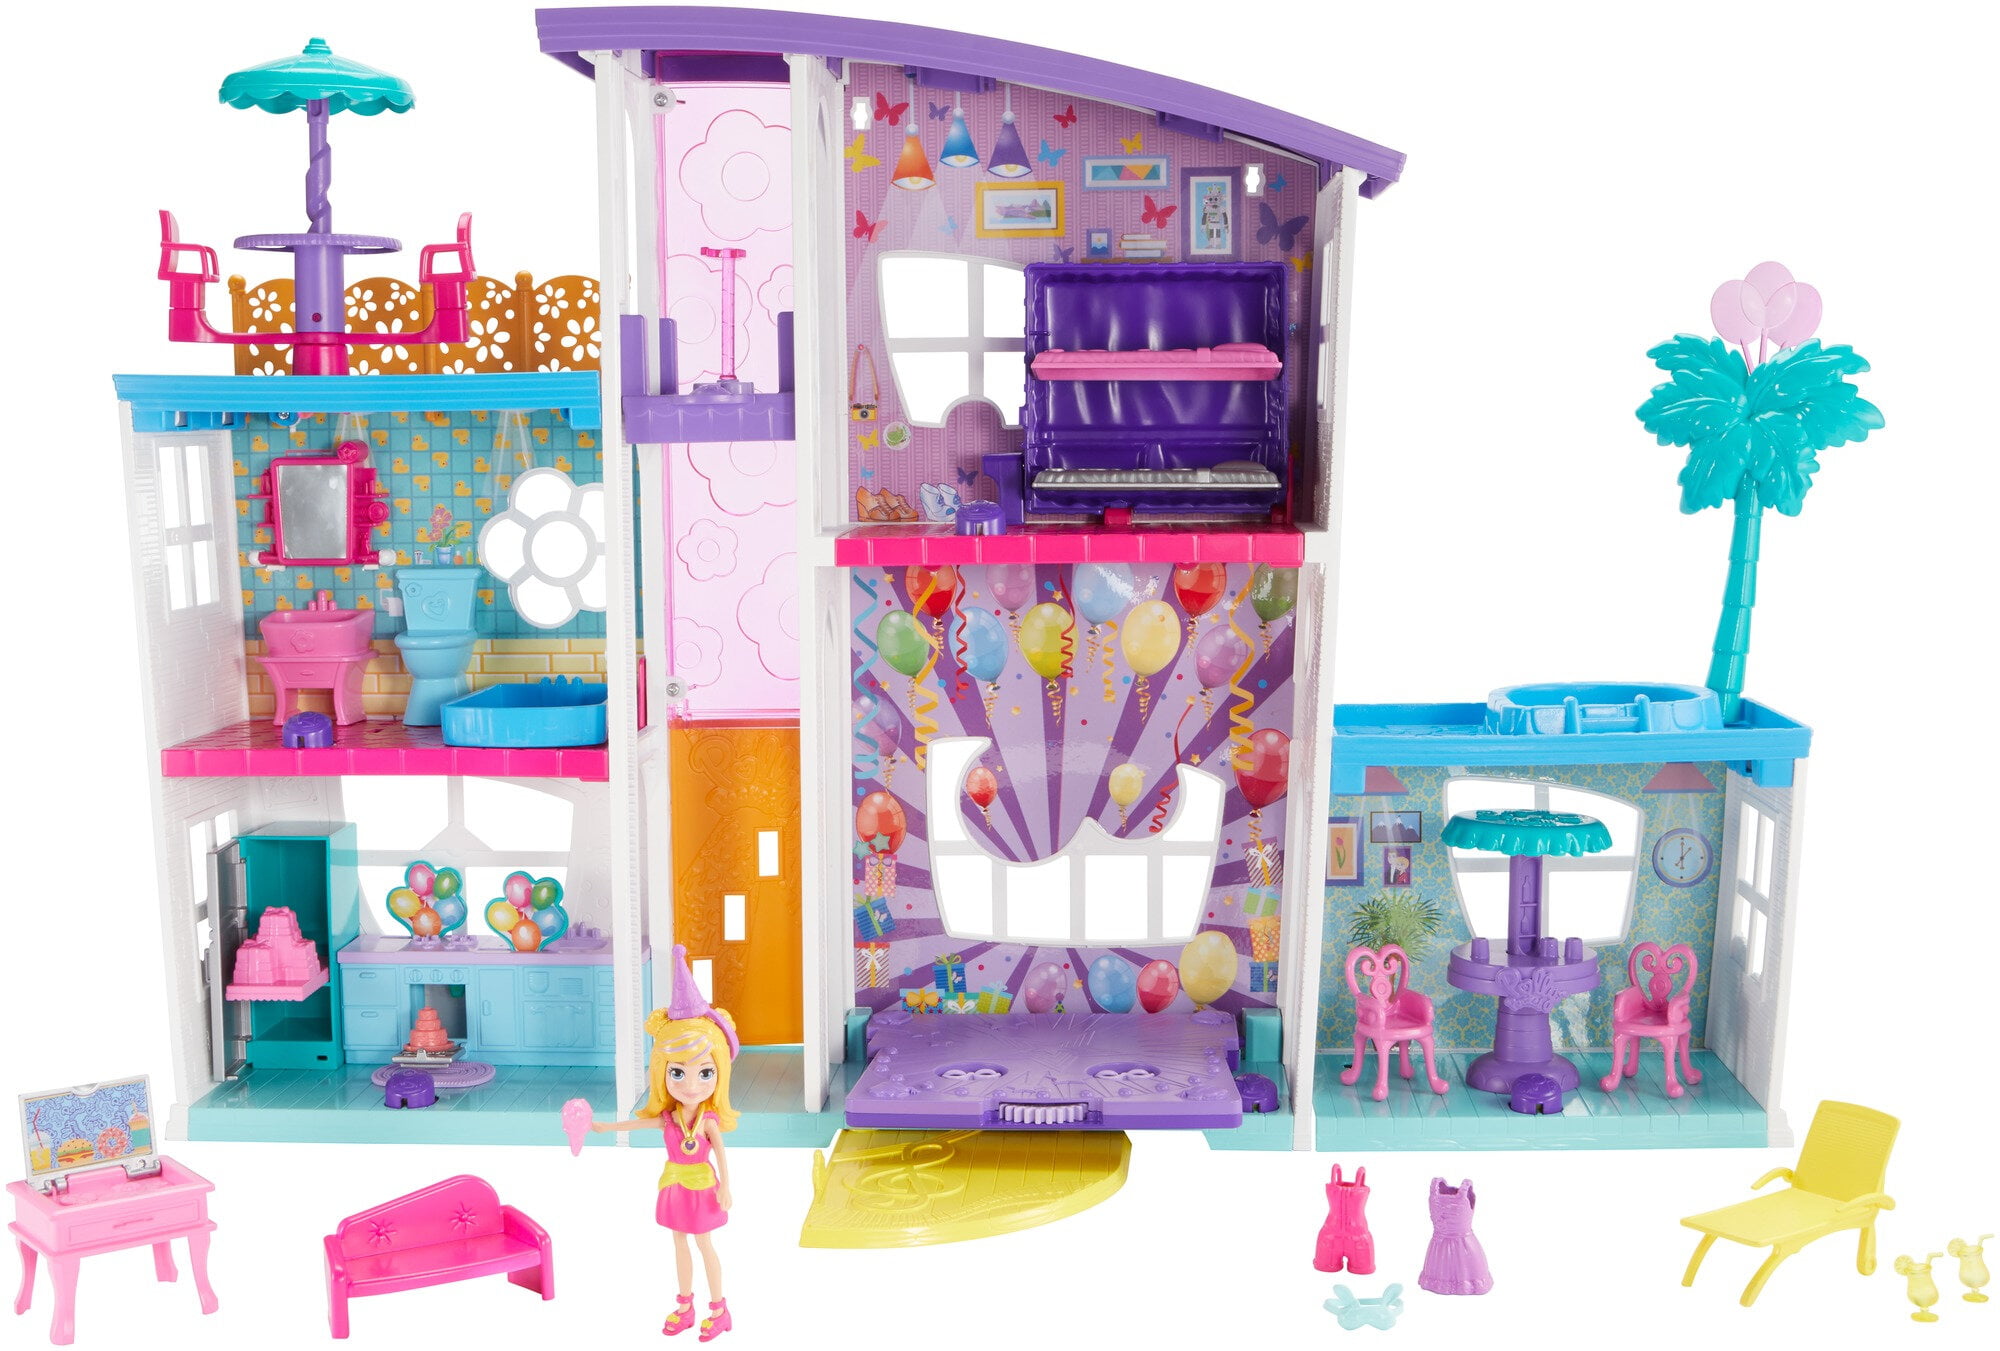 Bomcomi Dollhouse Wardrobe Plastic Cabinet Bedroom Miniature Furniture Doll House Accessories Girls Toys